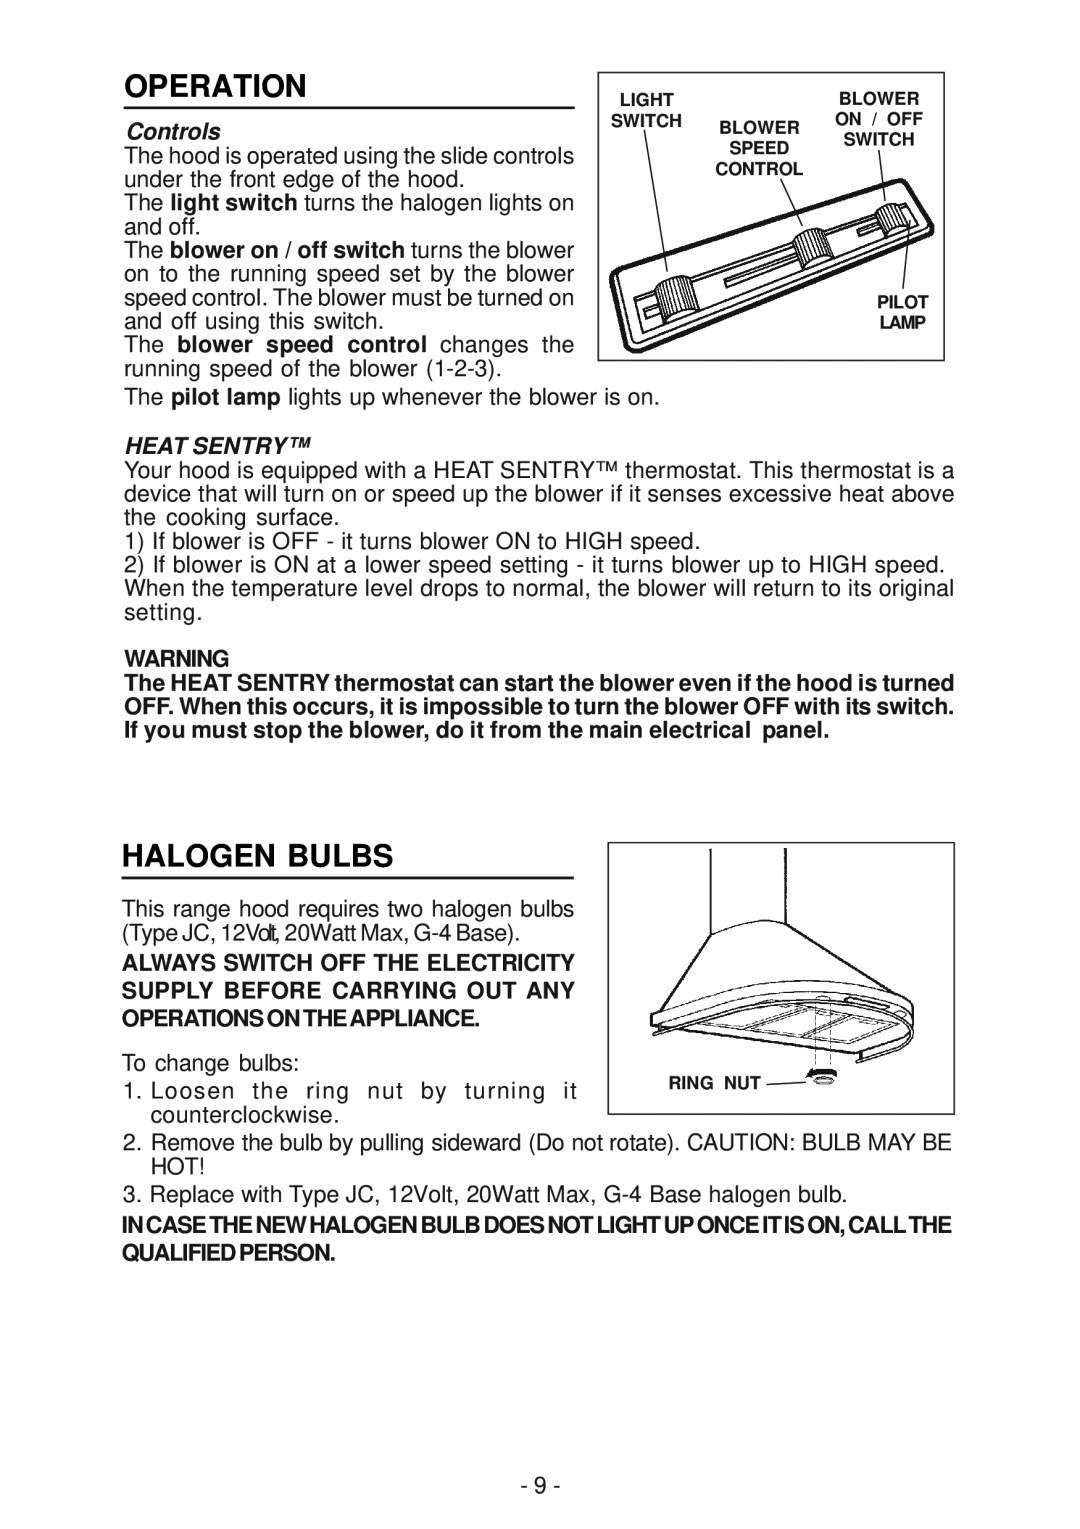 Best K15 manual Operation, Halogen Bulbs, Controls, Heat Sentry 